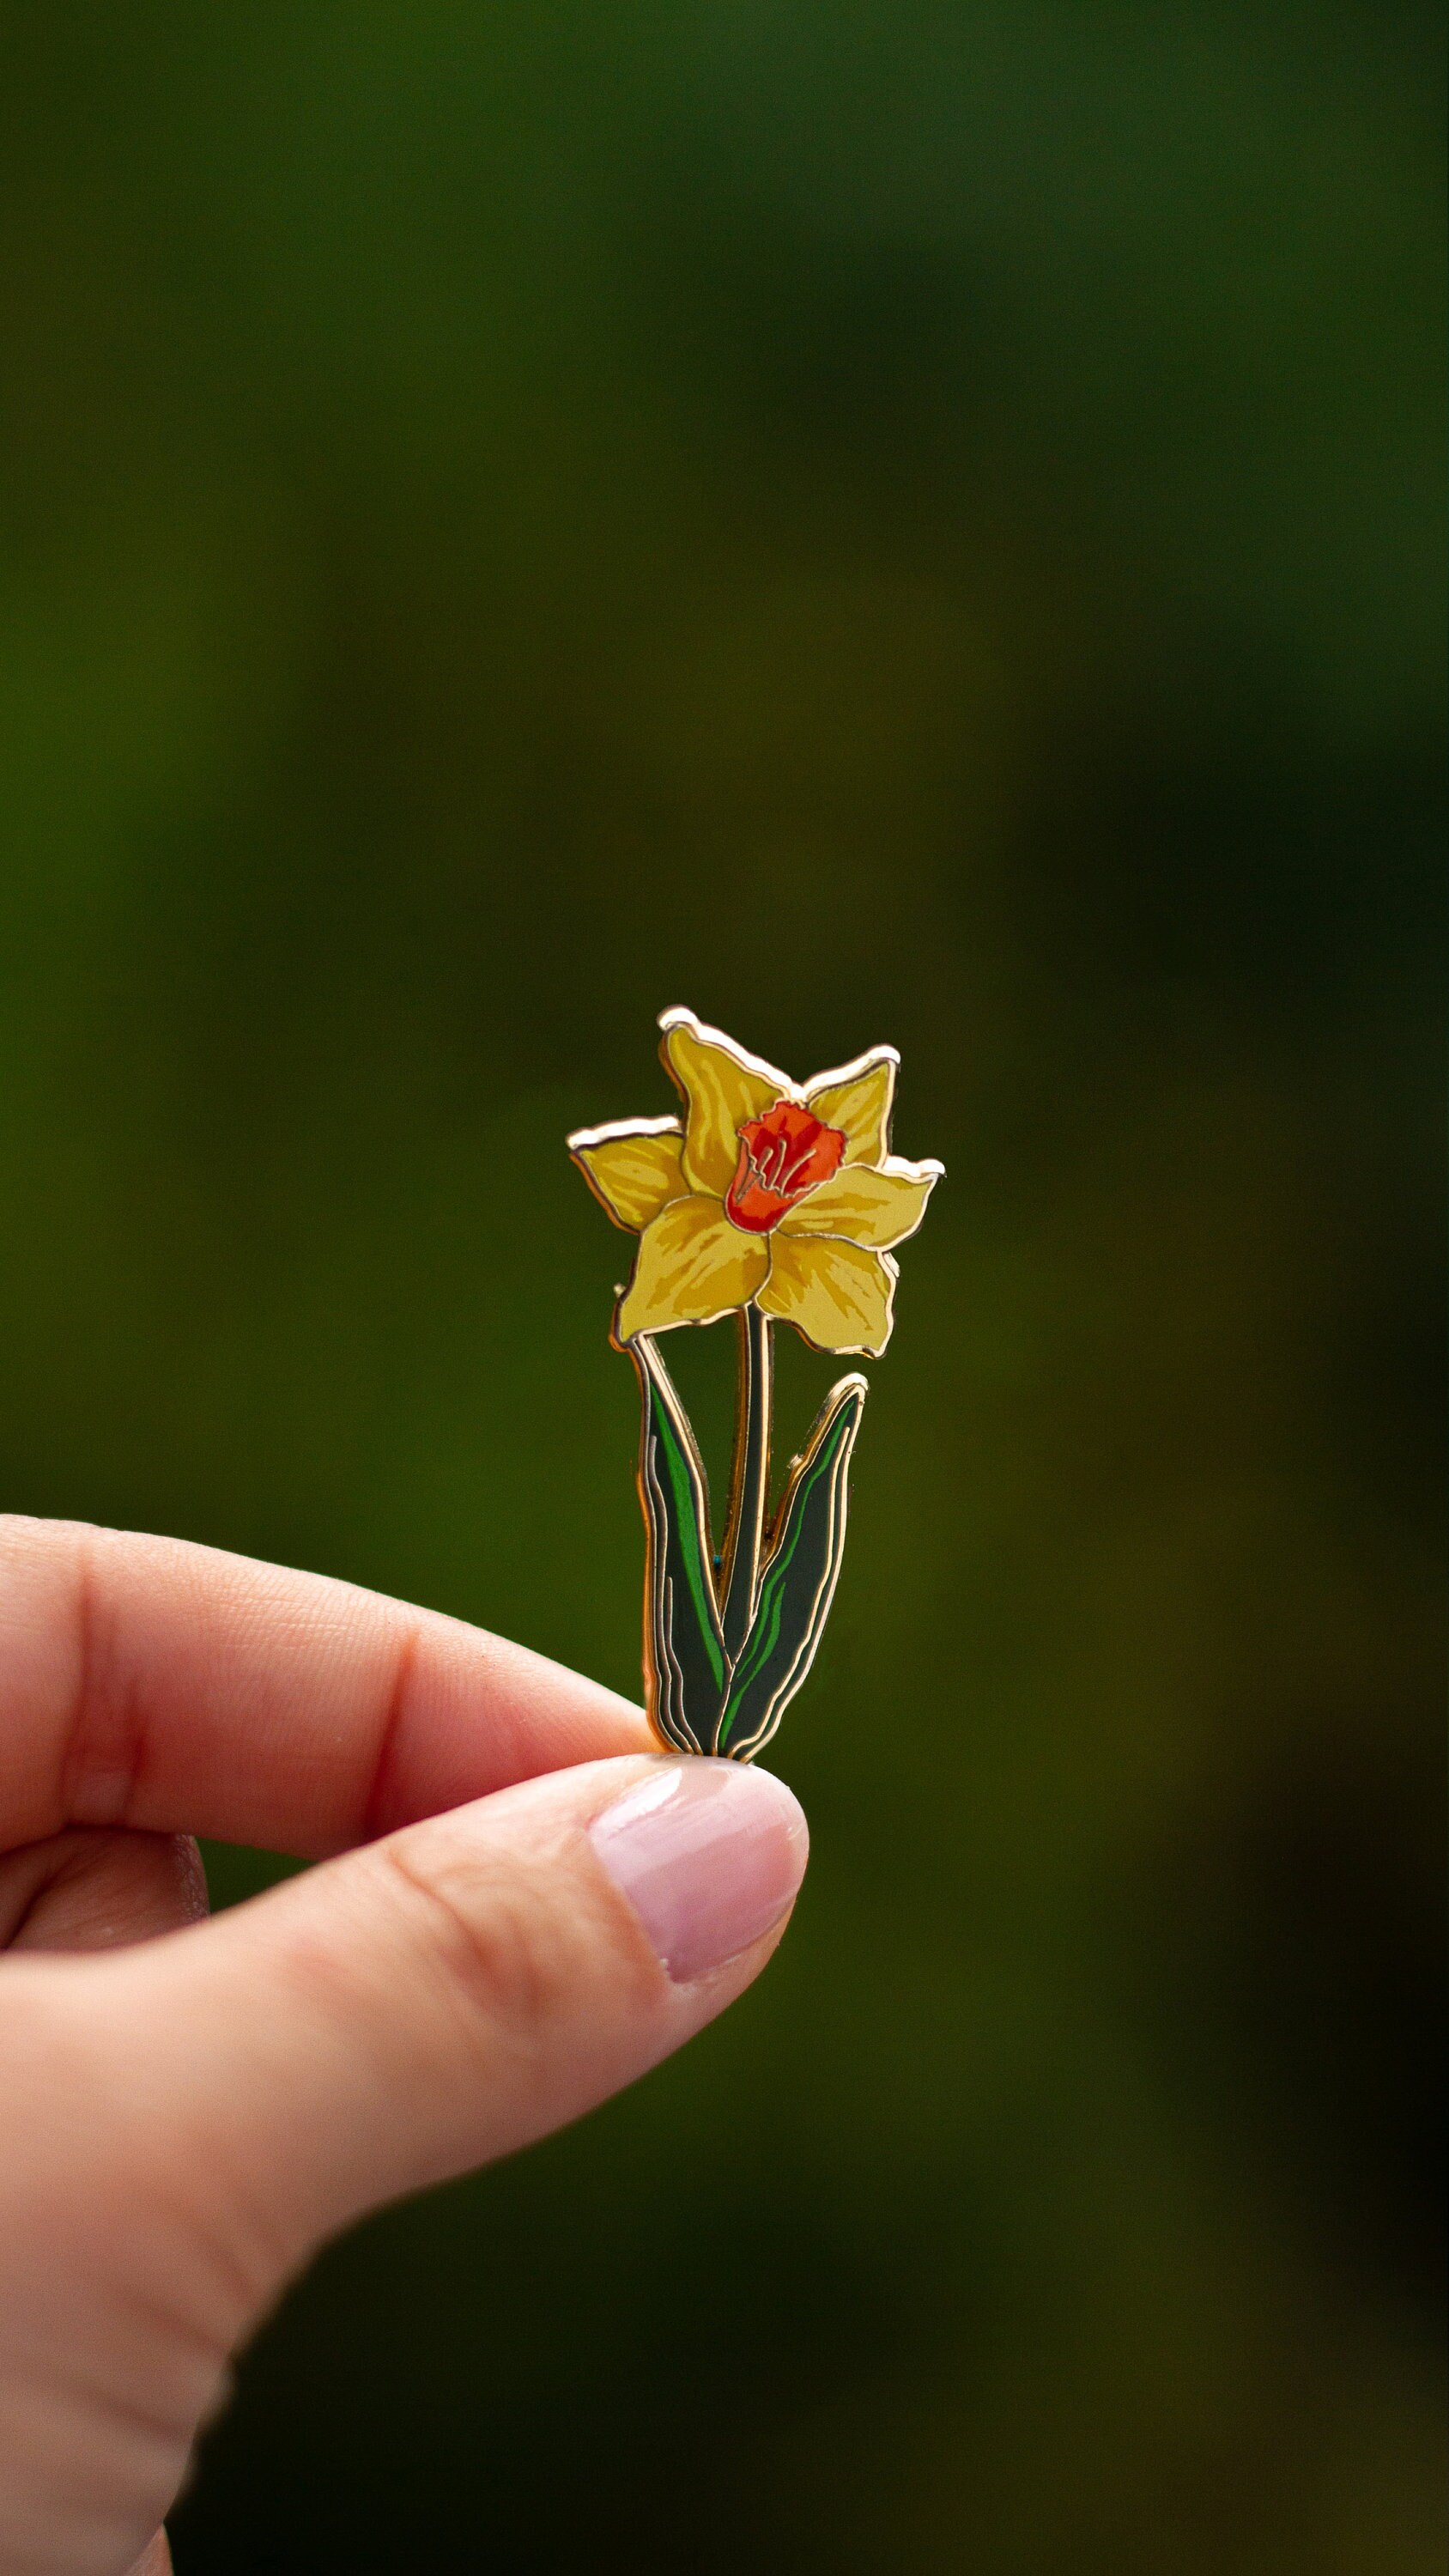 Daffodil Sewing Pins Decorative Sewing Pins Garden Pins Push Pins  Scrapbooking Pin Bulletin Board Pin Gift for Quilters 